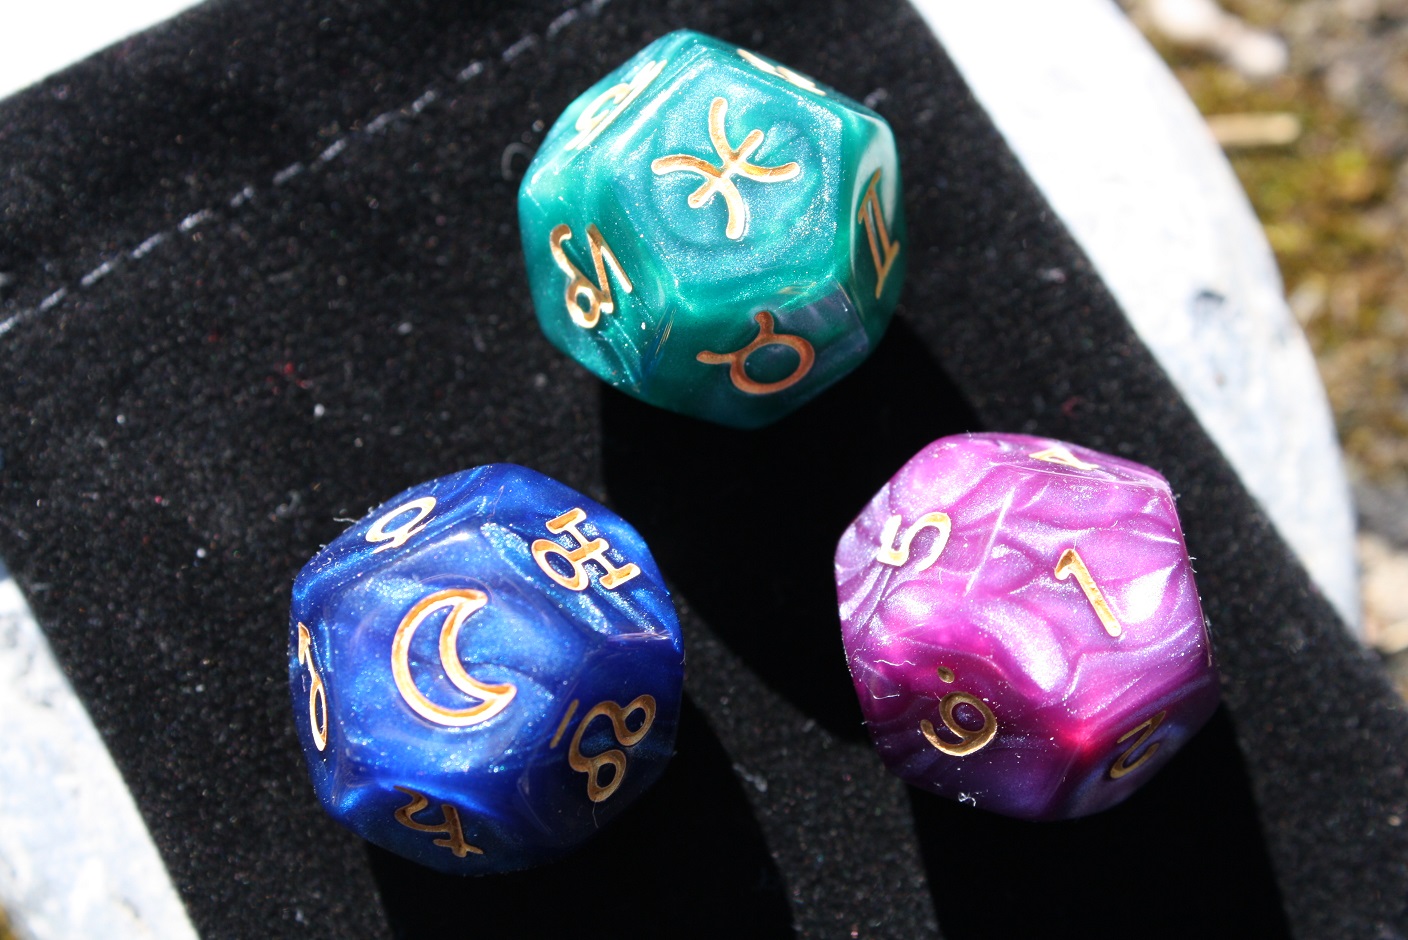 3 astrological divination dice